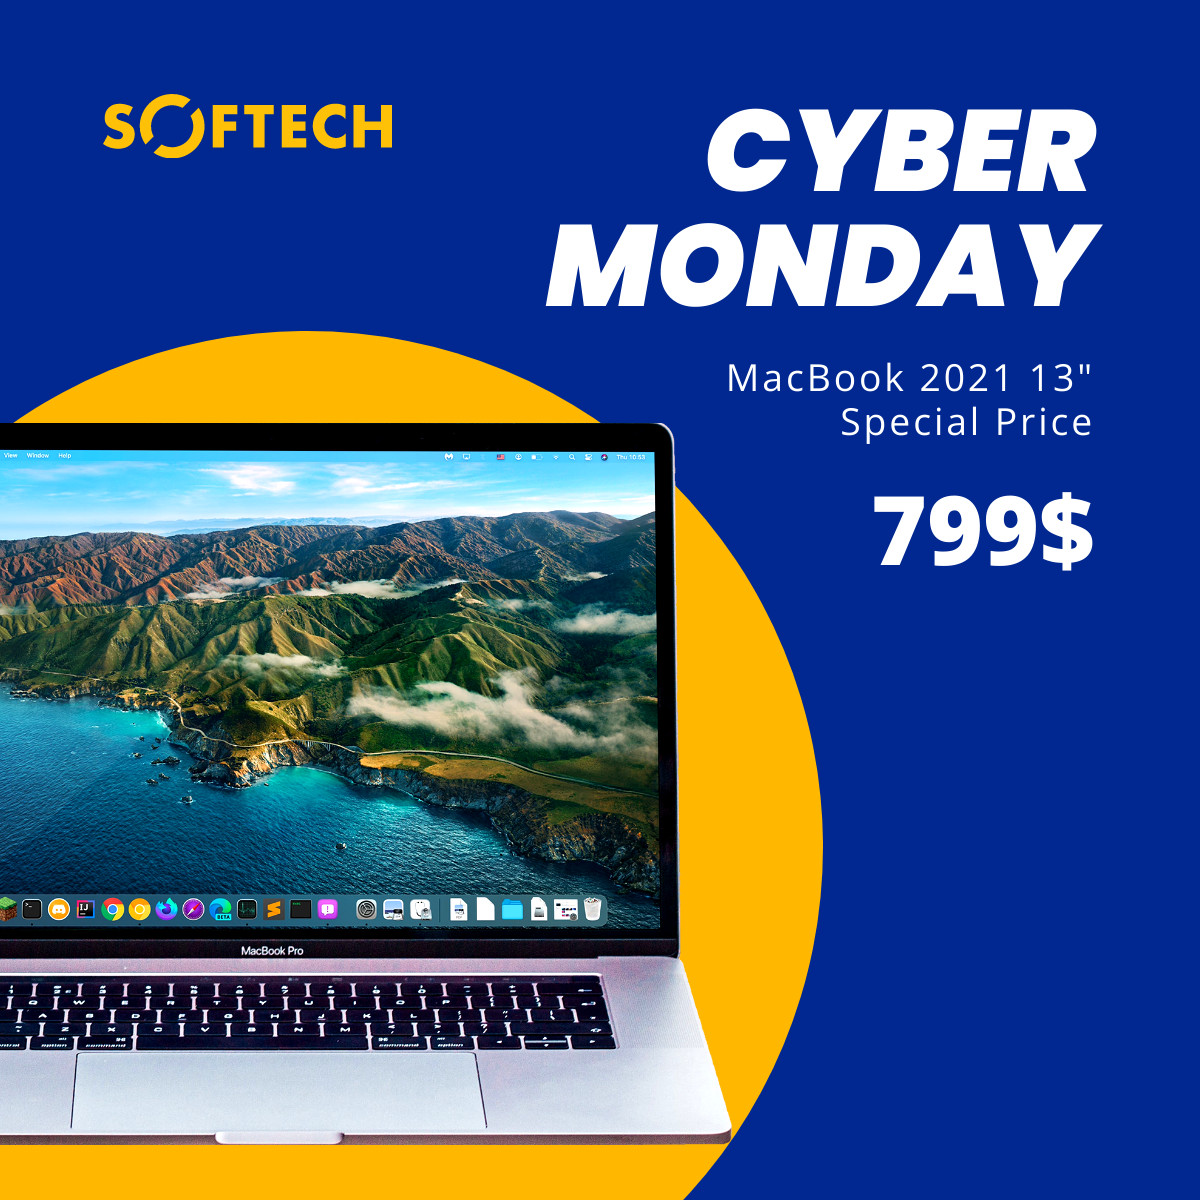 Cyber Monday MacBook 2021 Deal